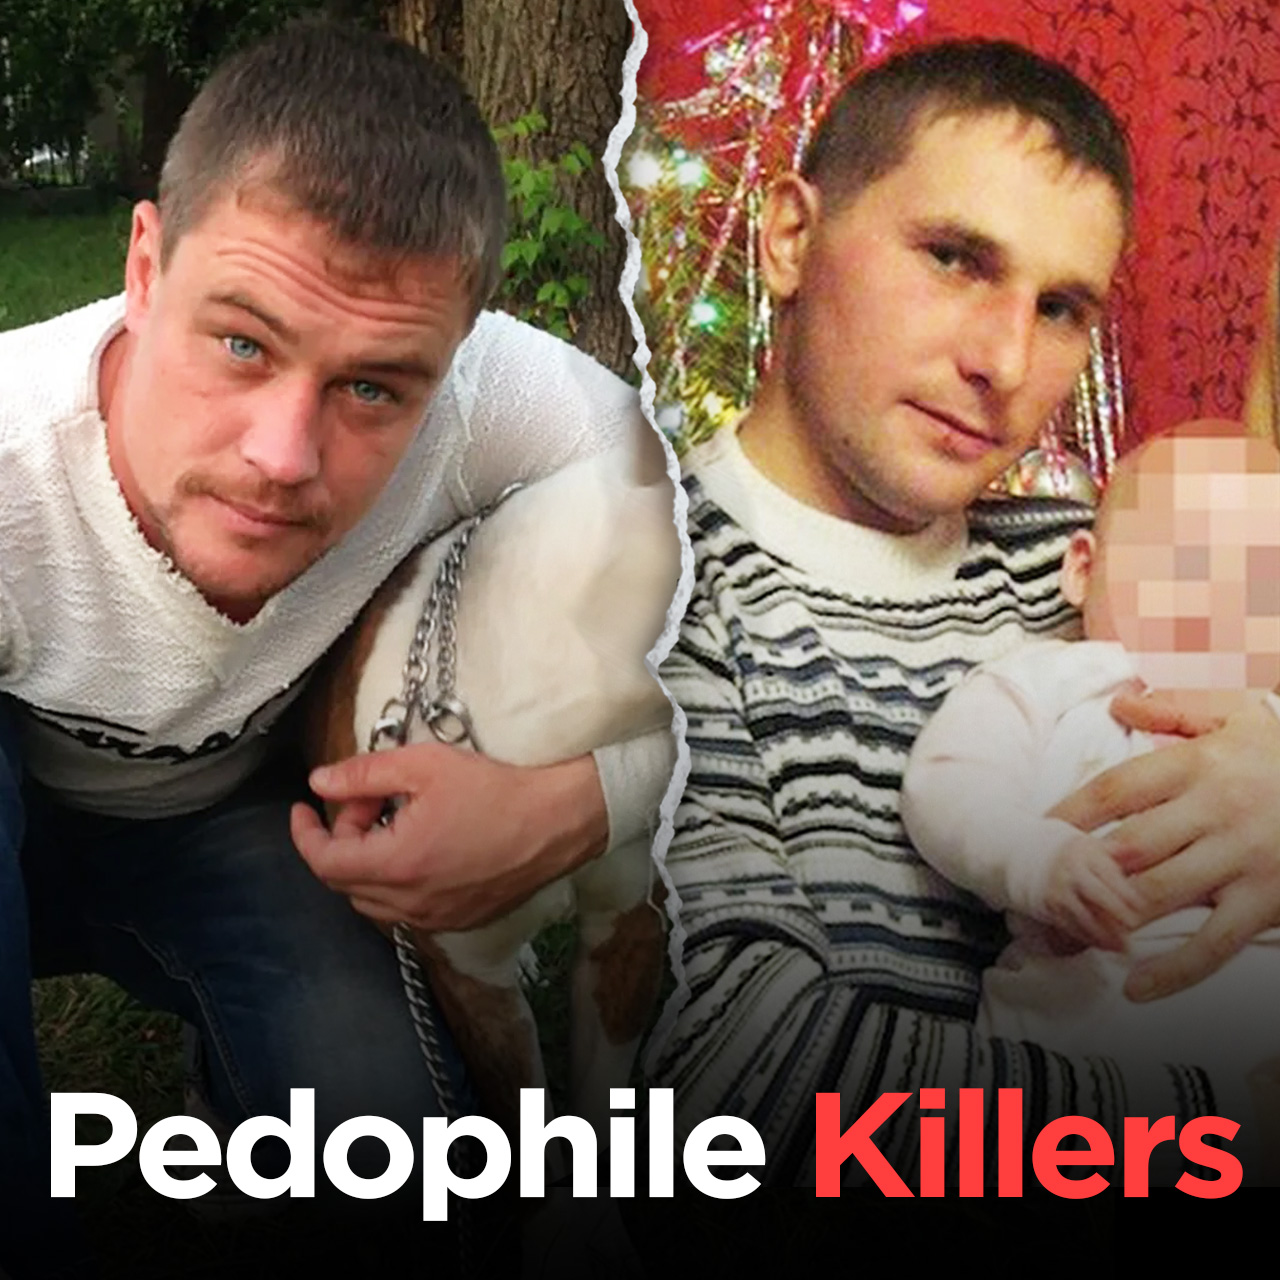 They saved children from pedophiles and were then arrested | Vladimir Sankin & Vyacheslav Matrosov